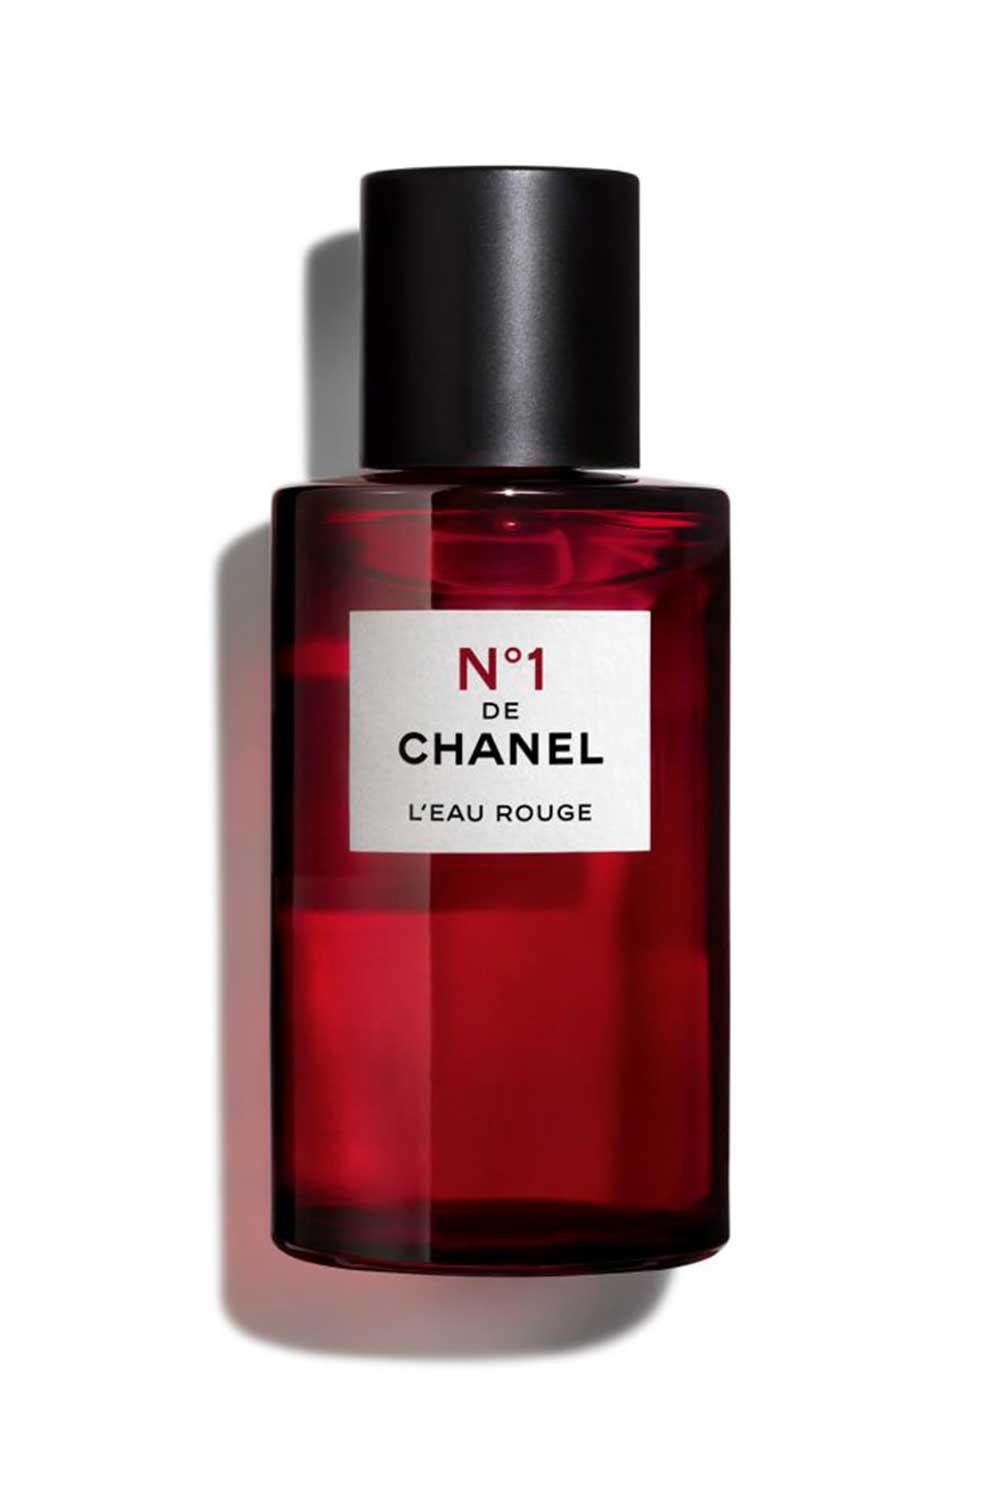 Chanel9. N°1 DE CHANEL L'Eau Rouge Agua Perfumada Revitalizante